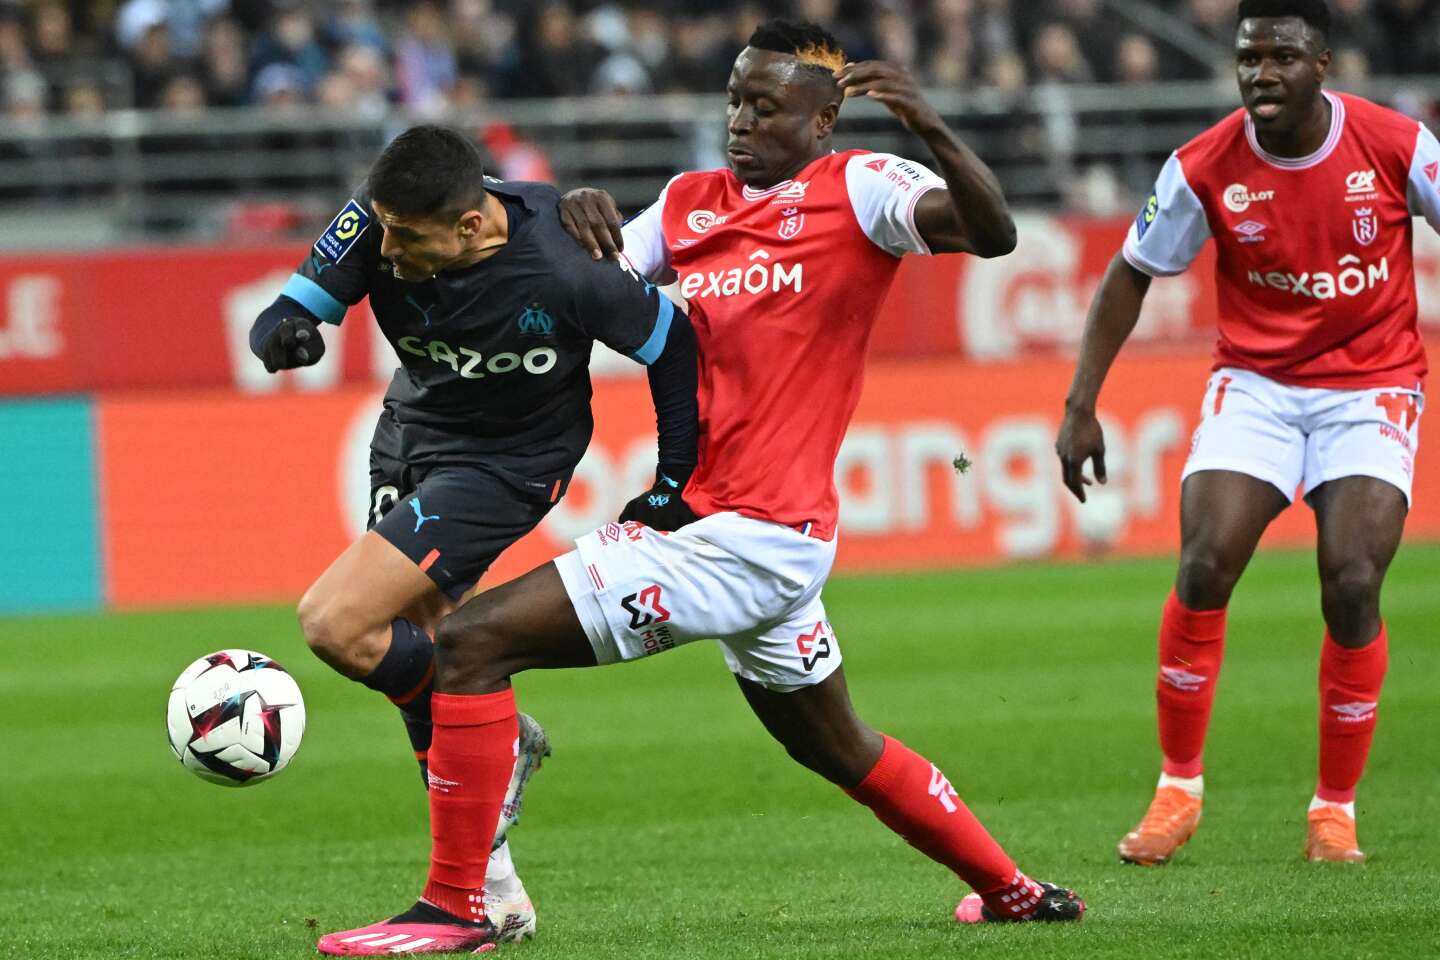 Marseille knock off Reims’ unbeaten streak and regain second place